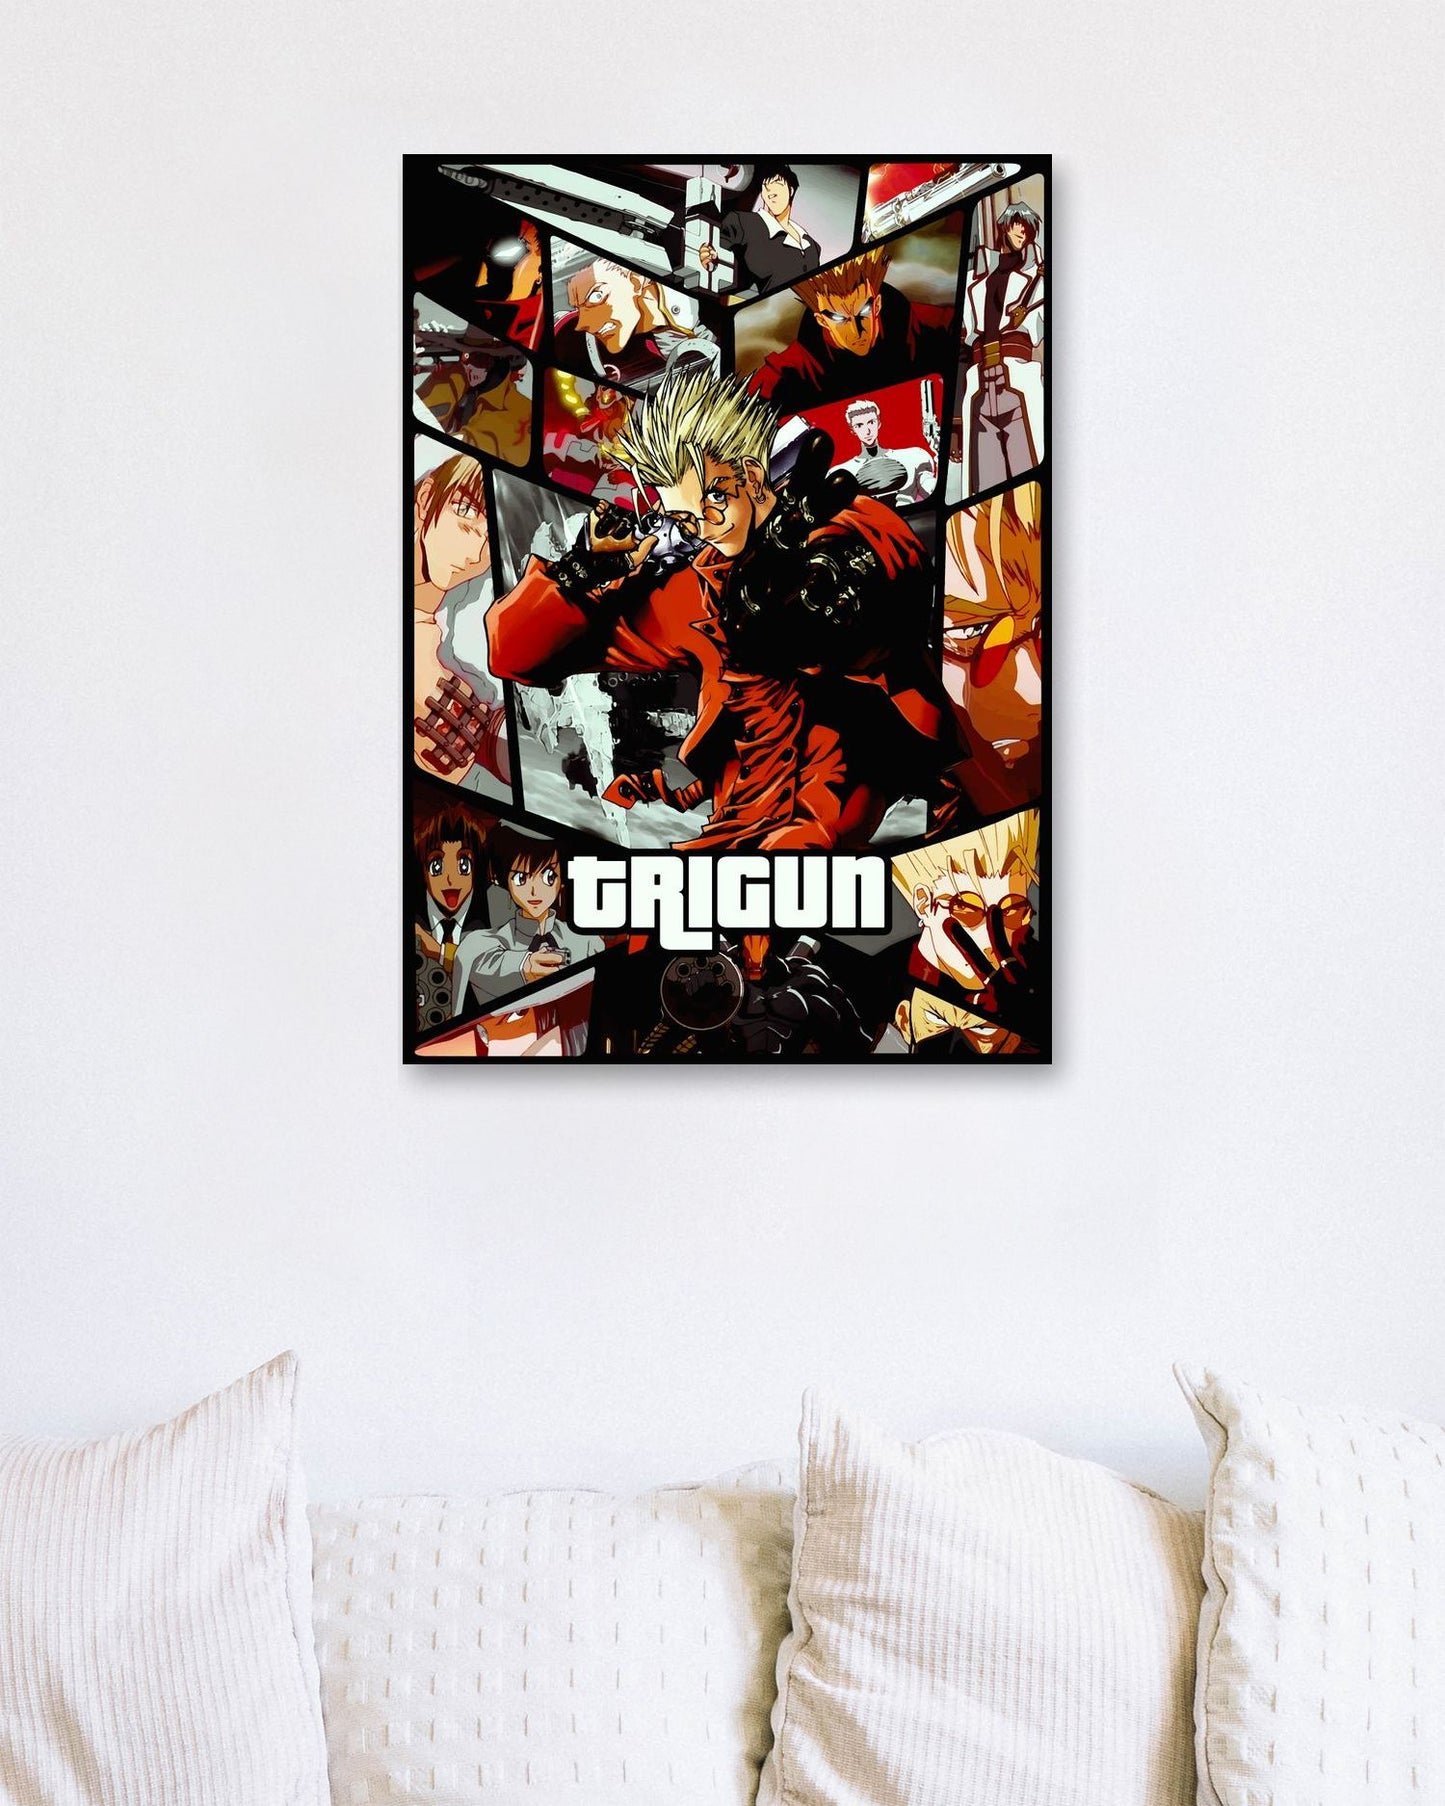 Trigun ultimate cover art classic anime - @SyanArt